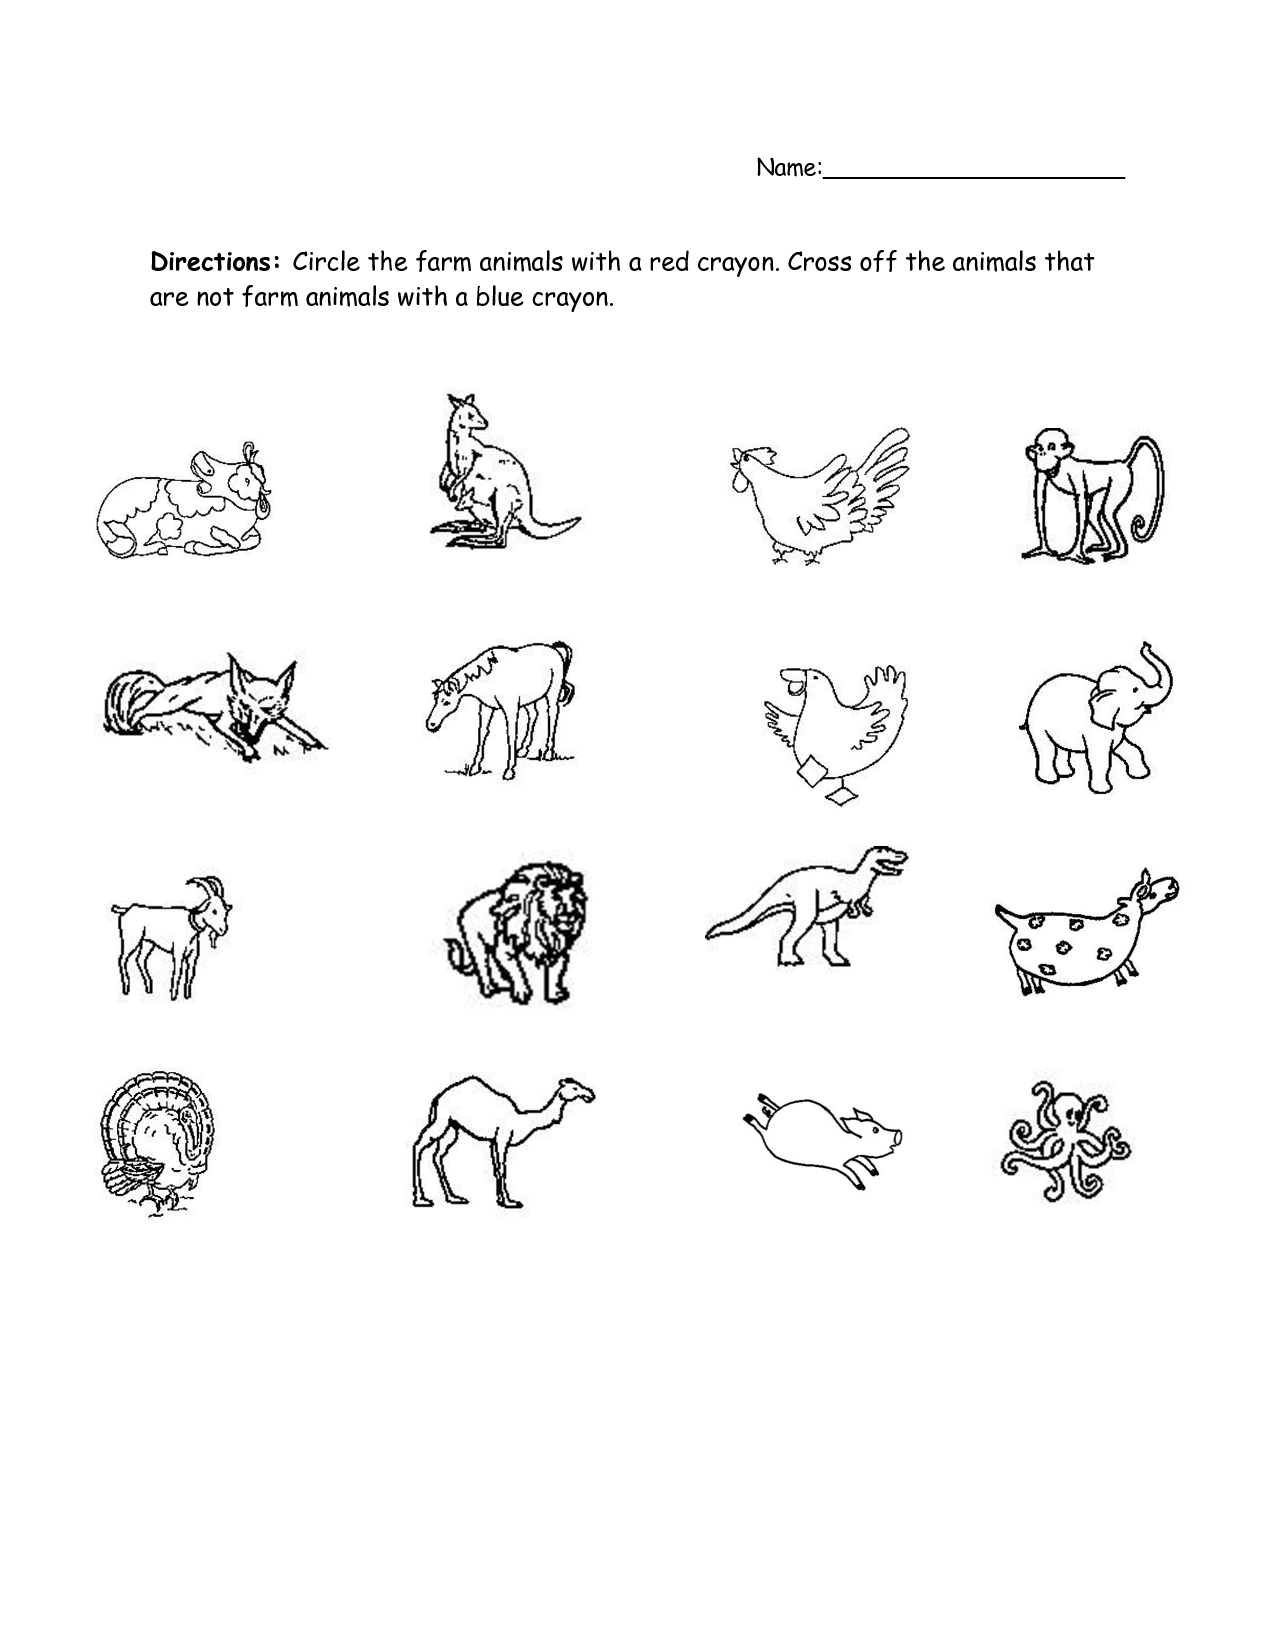 Farm Animals Math Preschool Worksheets Image